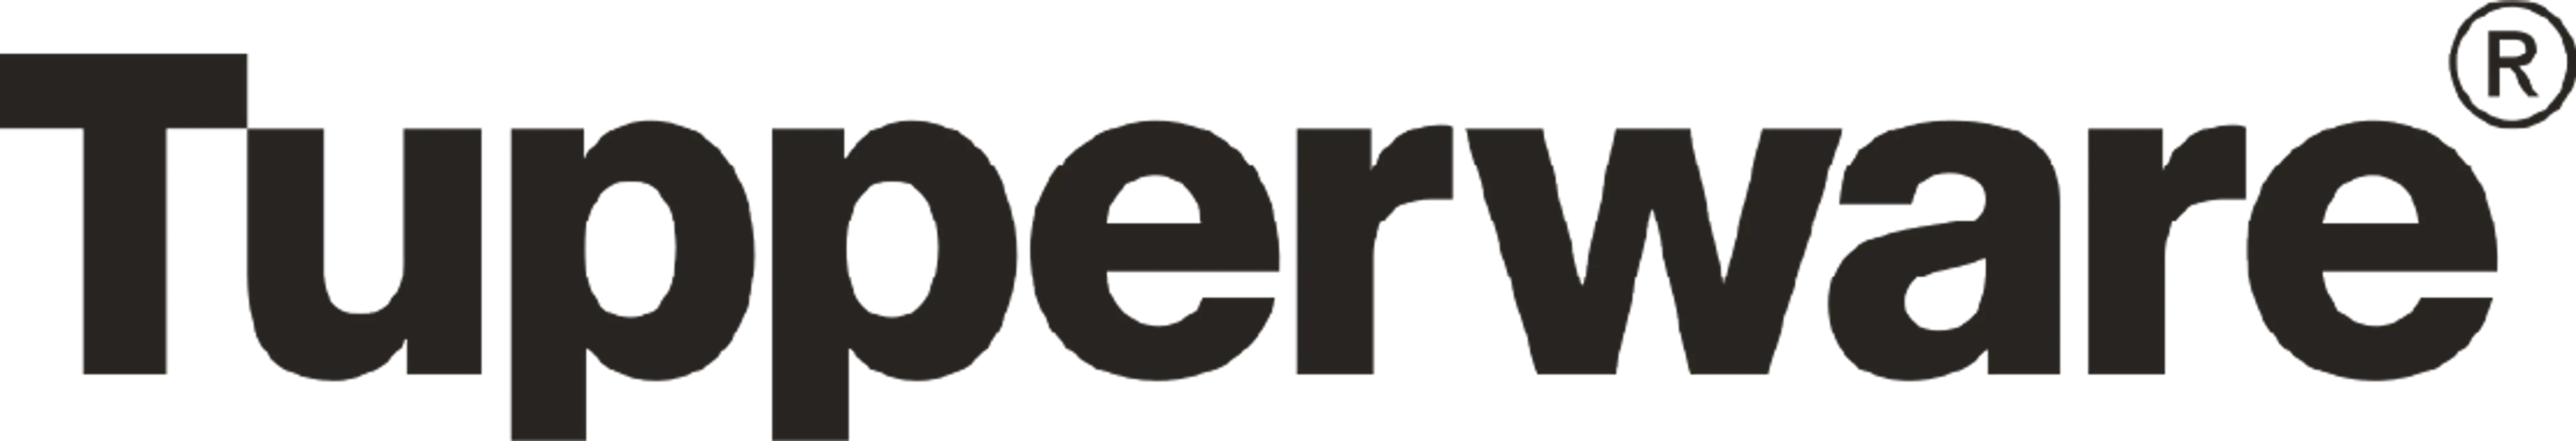 TUPPERWARE logo